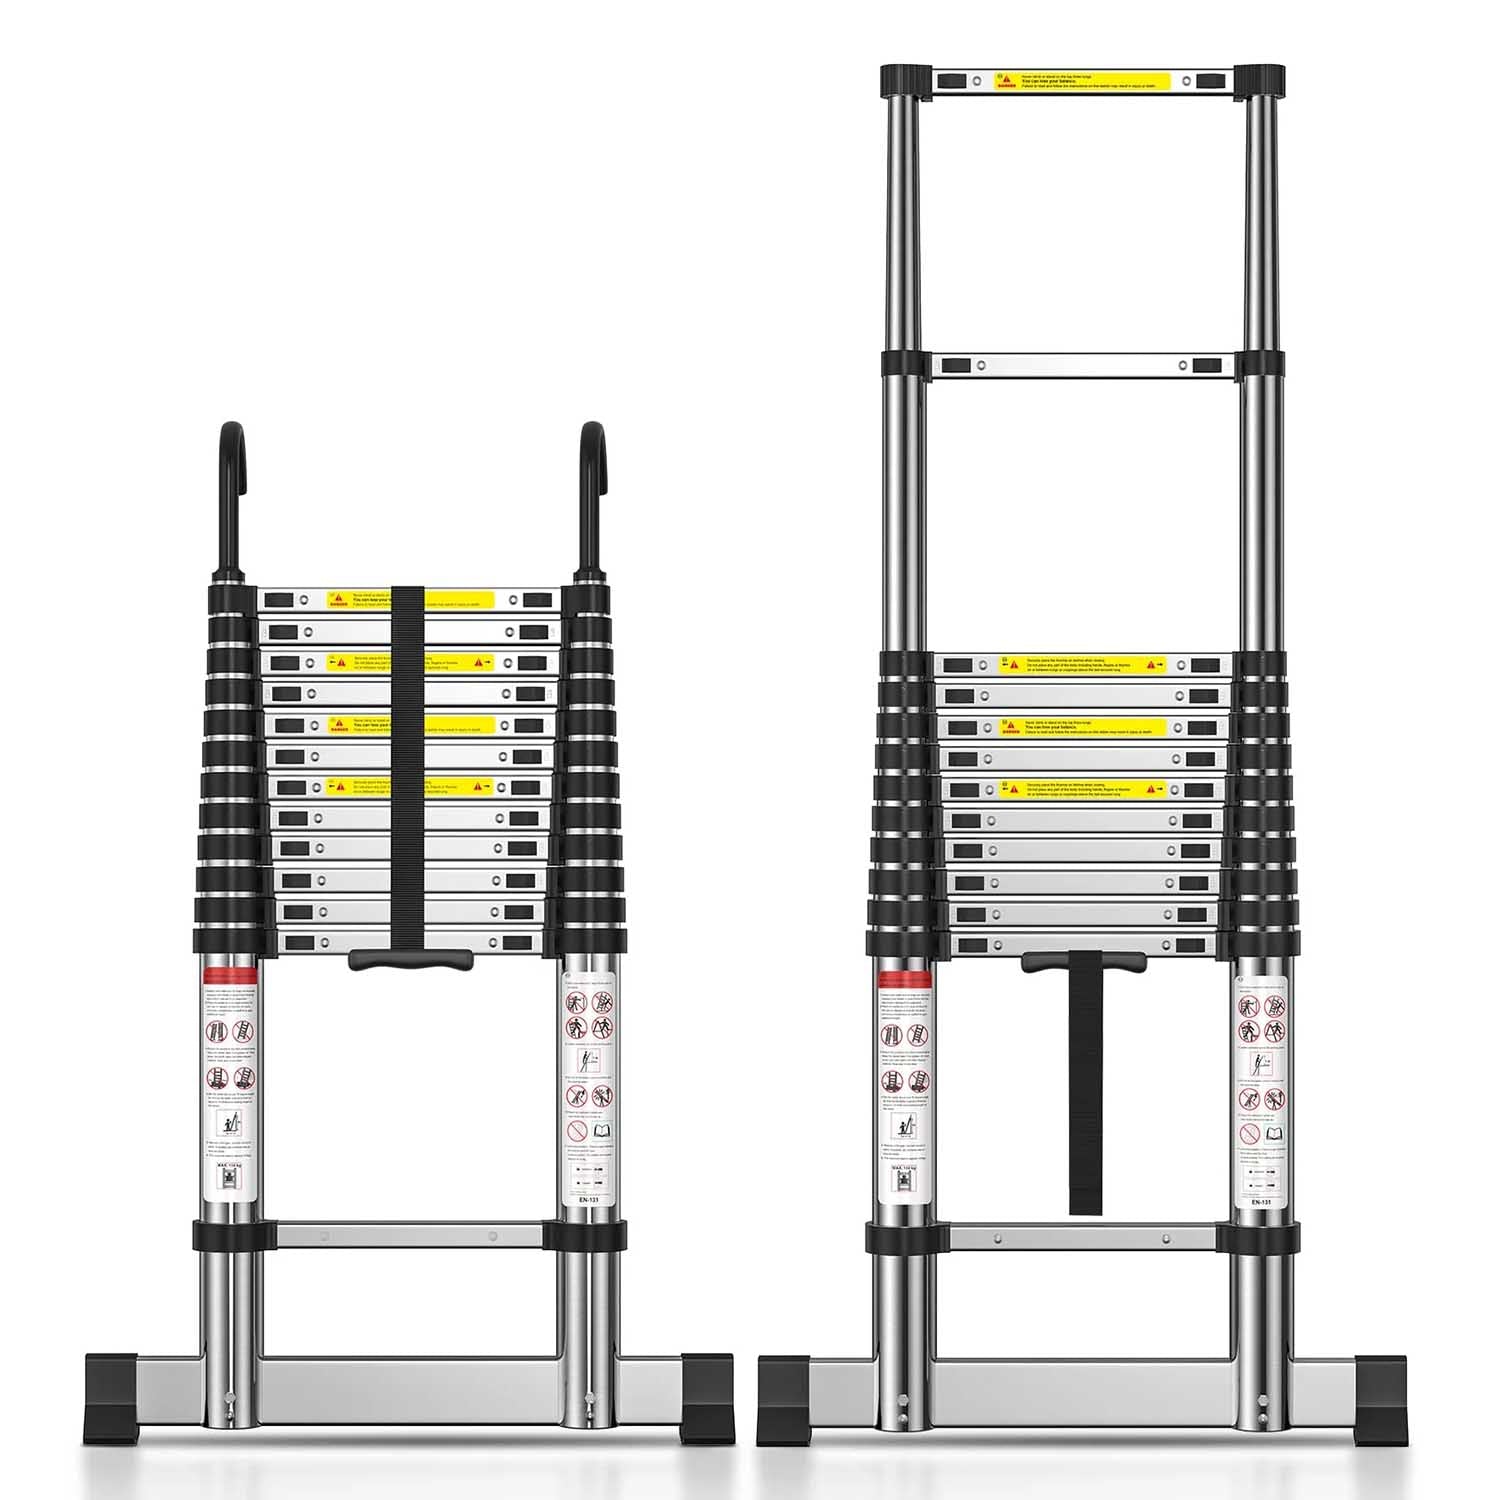 TECKNET Aluminium Extension Ladder with Stabilizer Bar, Telescopic Ladder 3.8M/12.5FT, Max Load 150kg/330lbs